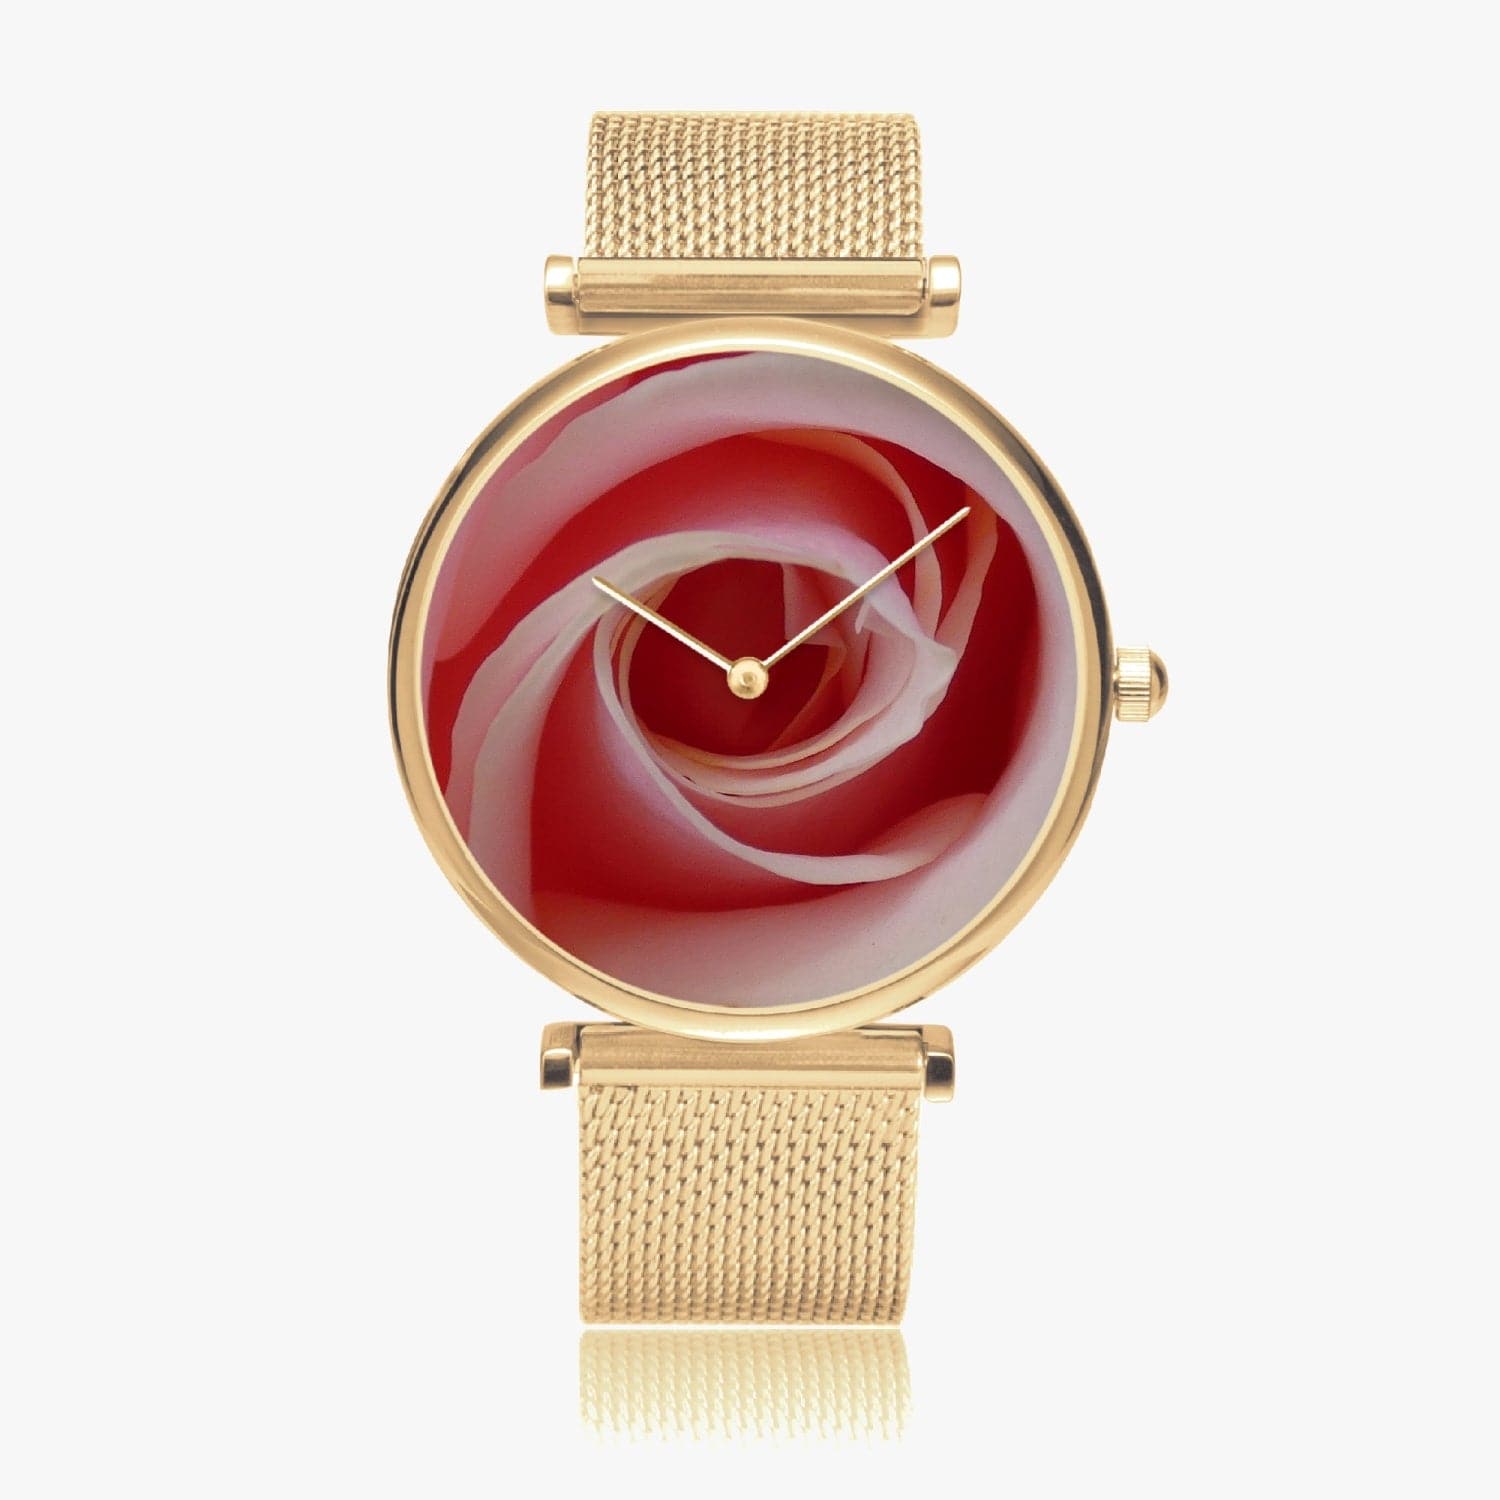 Pink rose, New Stylish Ultra-Thin Quartz Watch. Designer watch by Sensus Studio Design